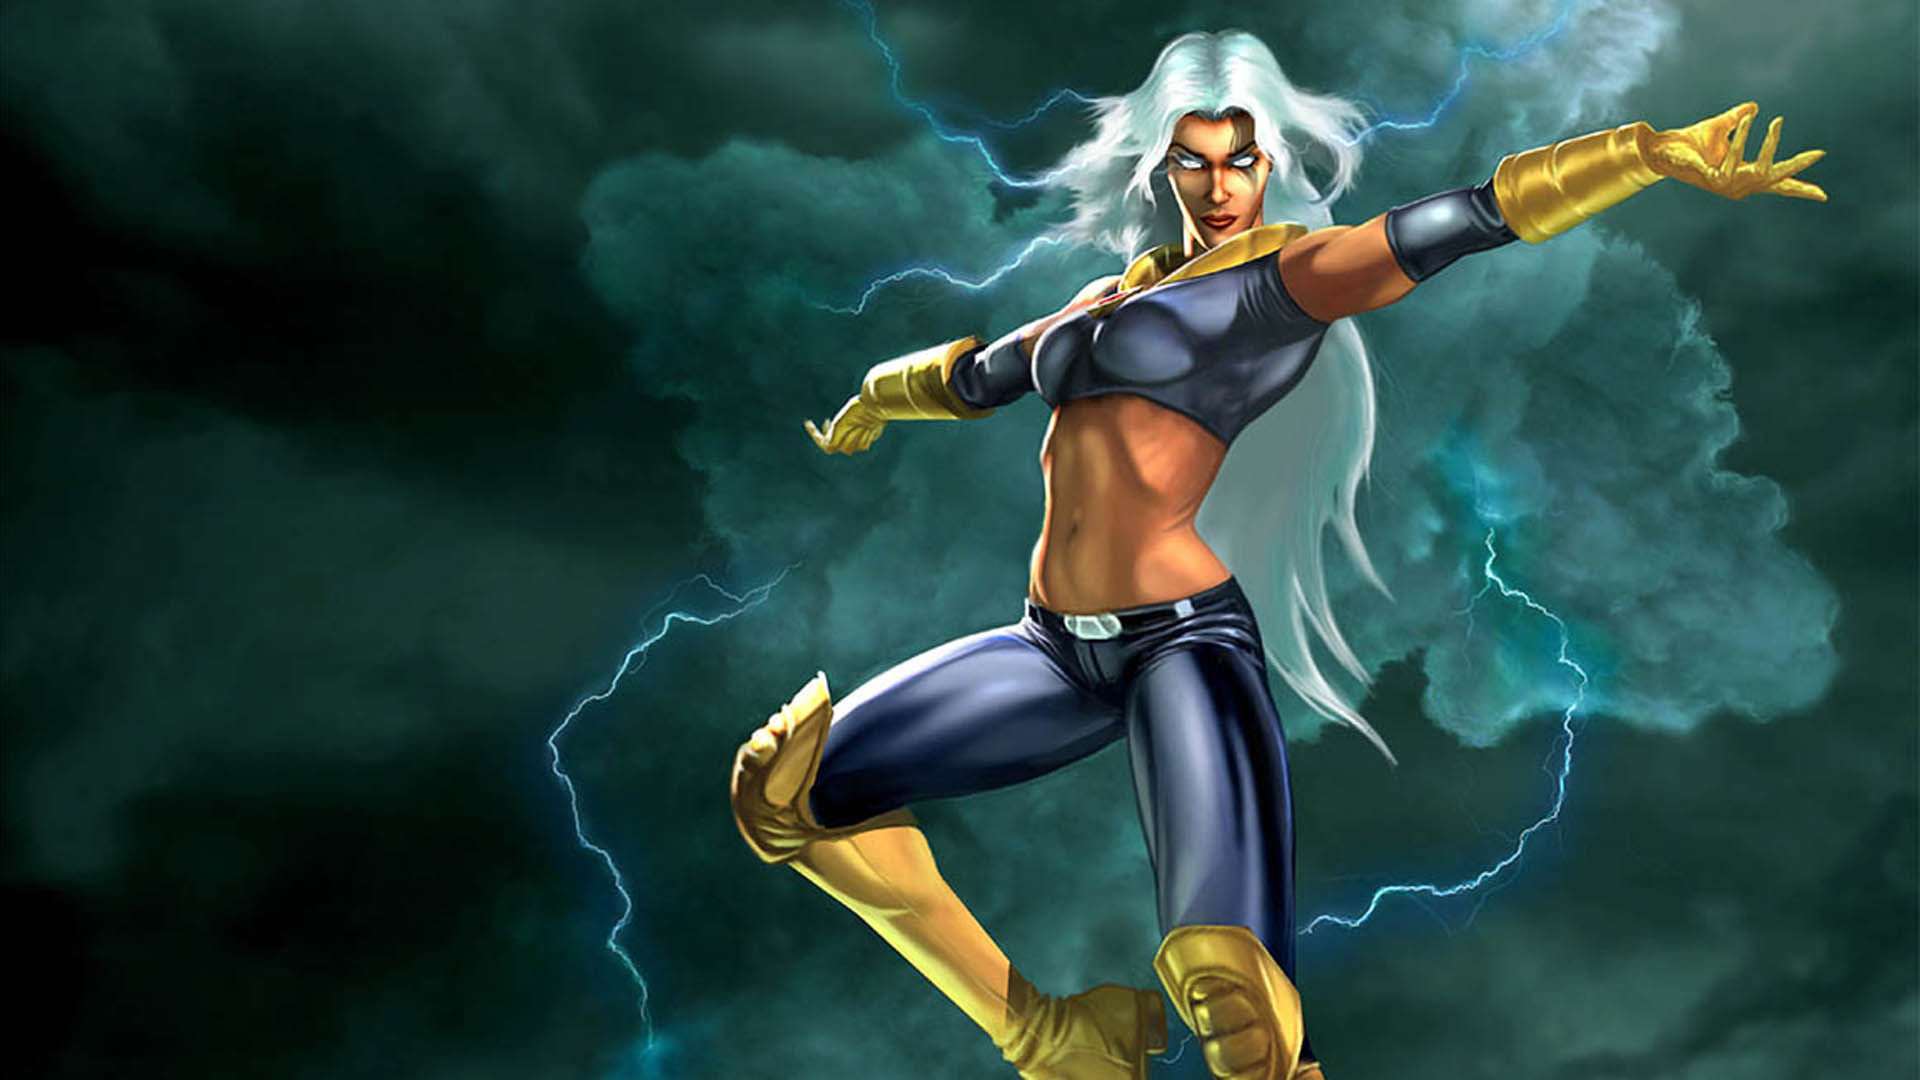 HD desktop wallpaper: X Men, Video Game, Storm (Marvel Comics), X Men  Legends download free picture #363037